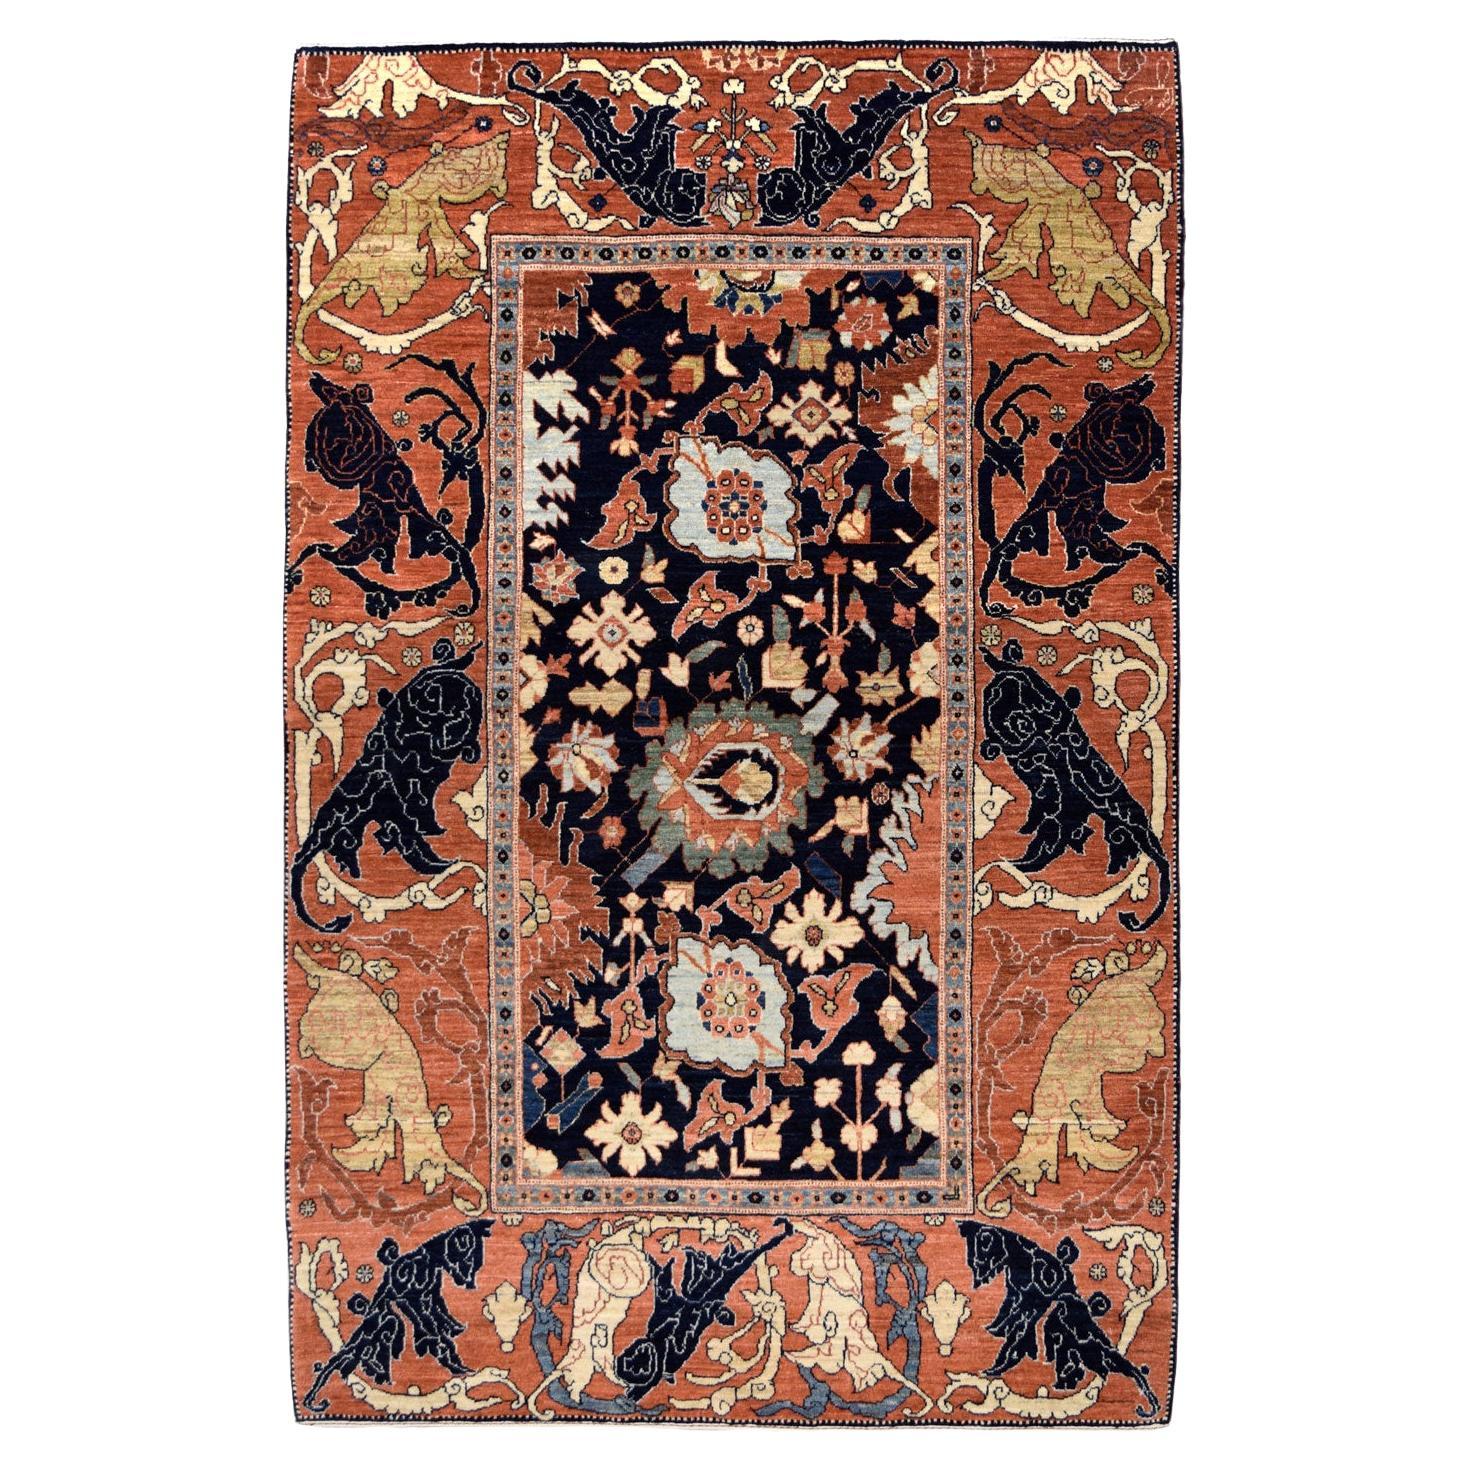 Wool Transitional Persian Bakhshaysh Rug, Multicolored, 4' x 6'